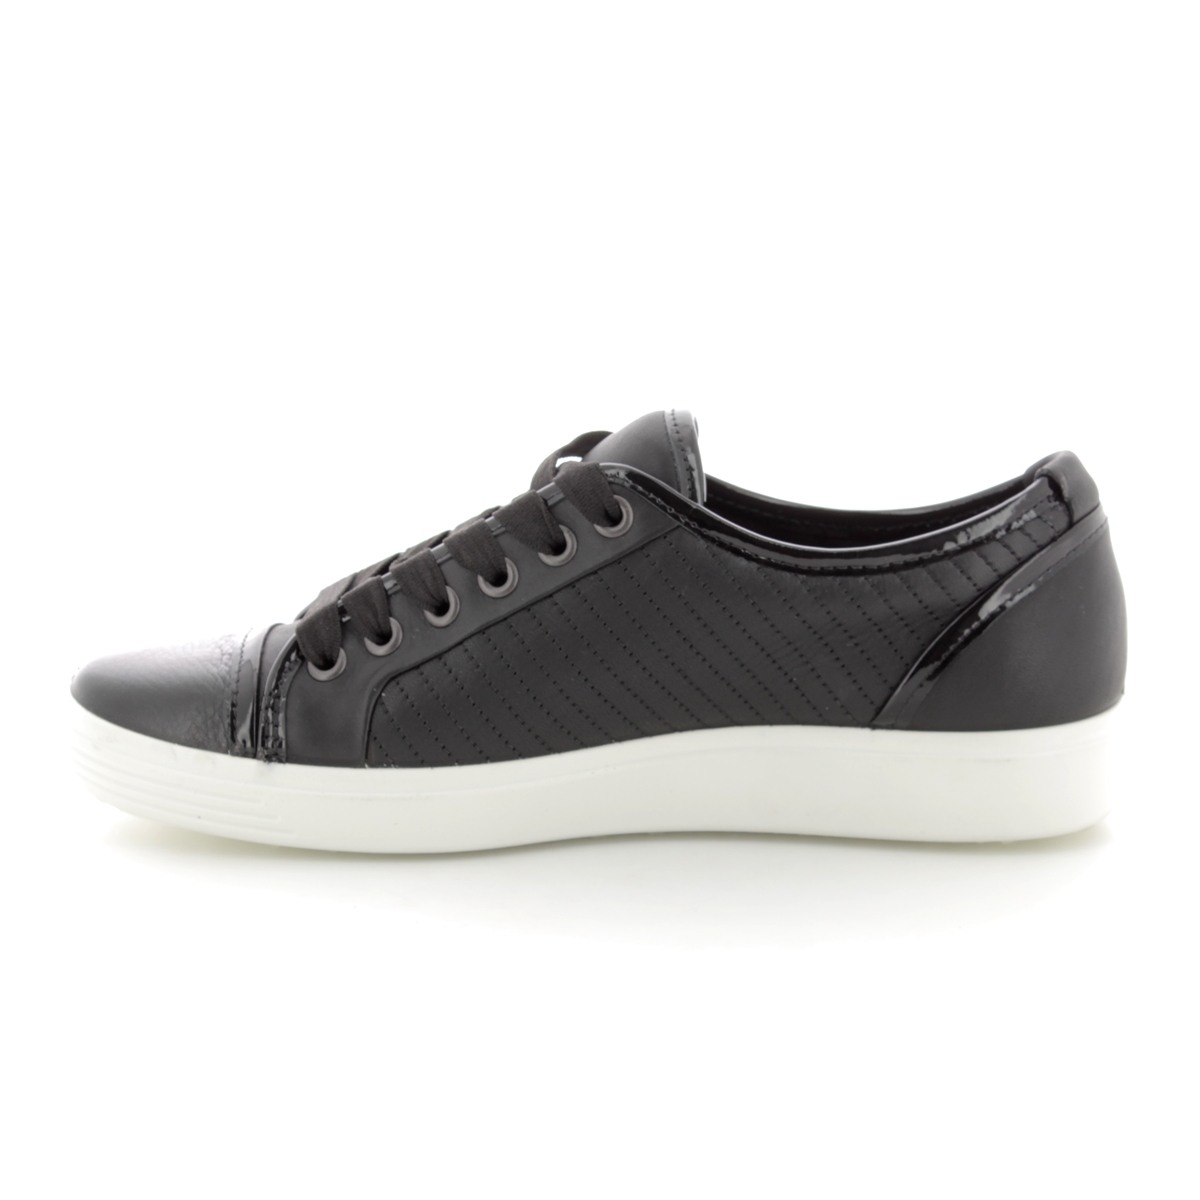 ECCO Soft 7 Ladies 85 430903-51094 Black leather lacing shoes